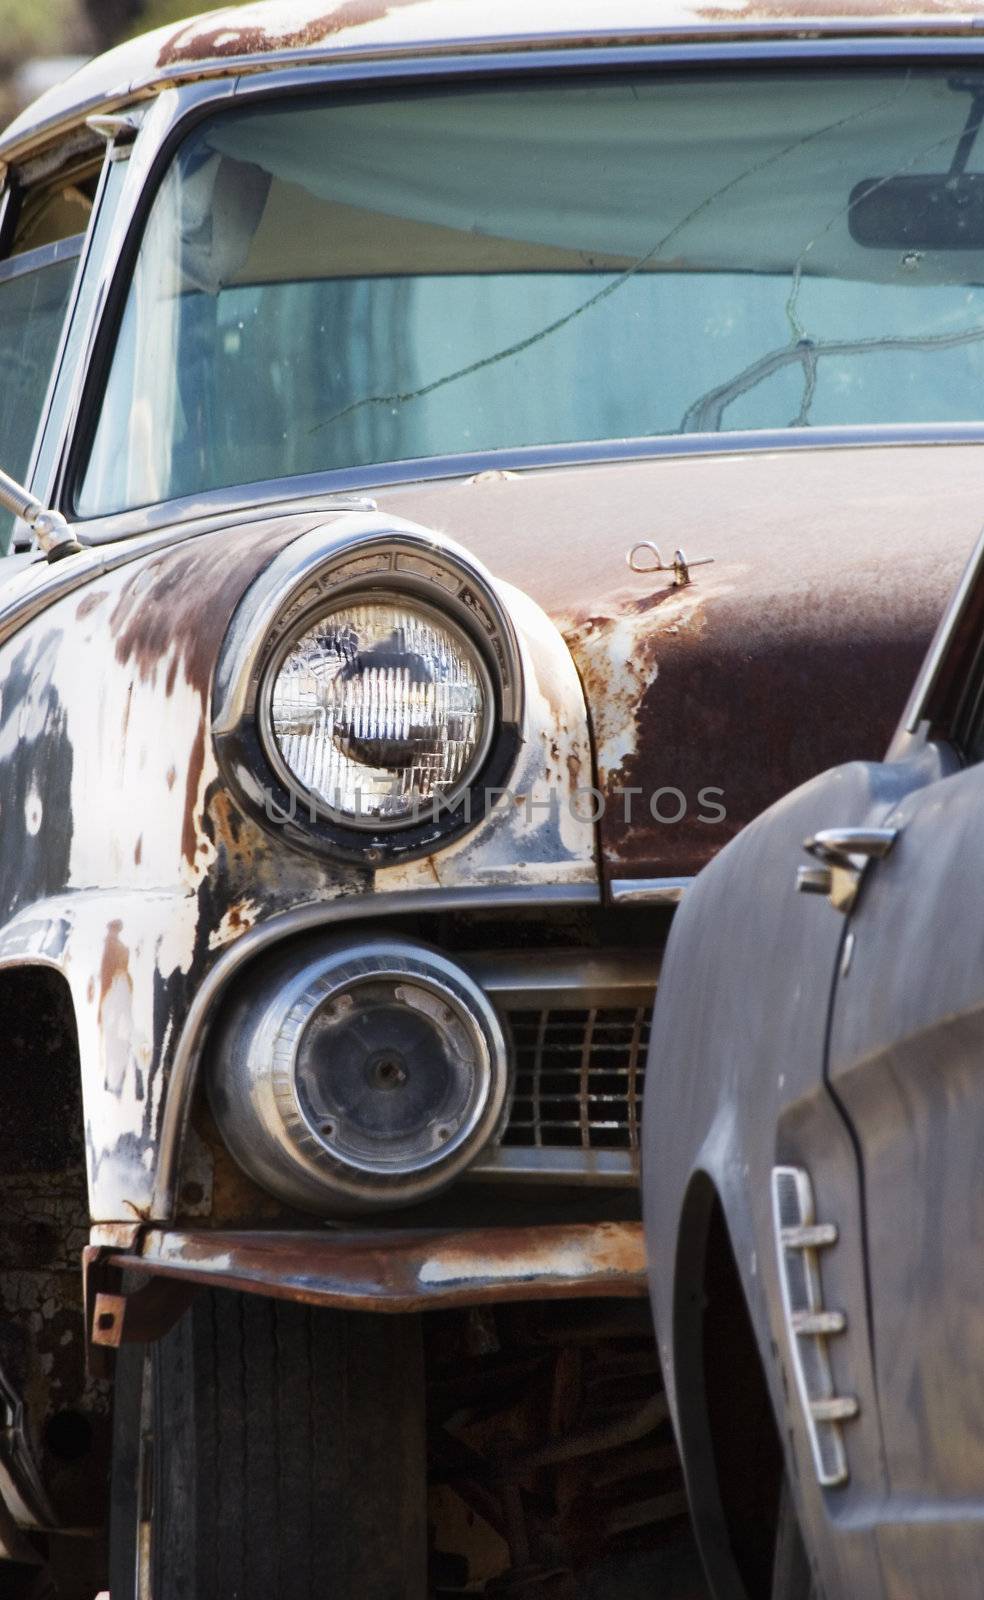 Headlight on an Abandoned Car by Creatista